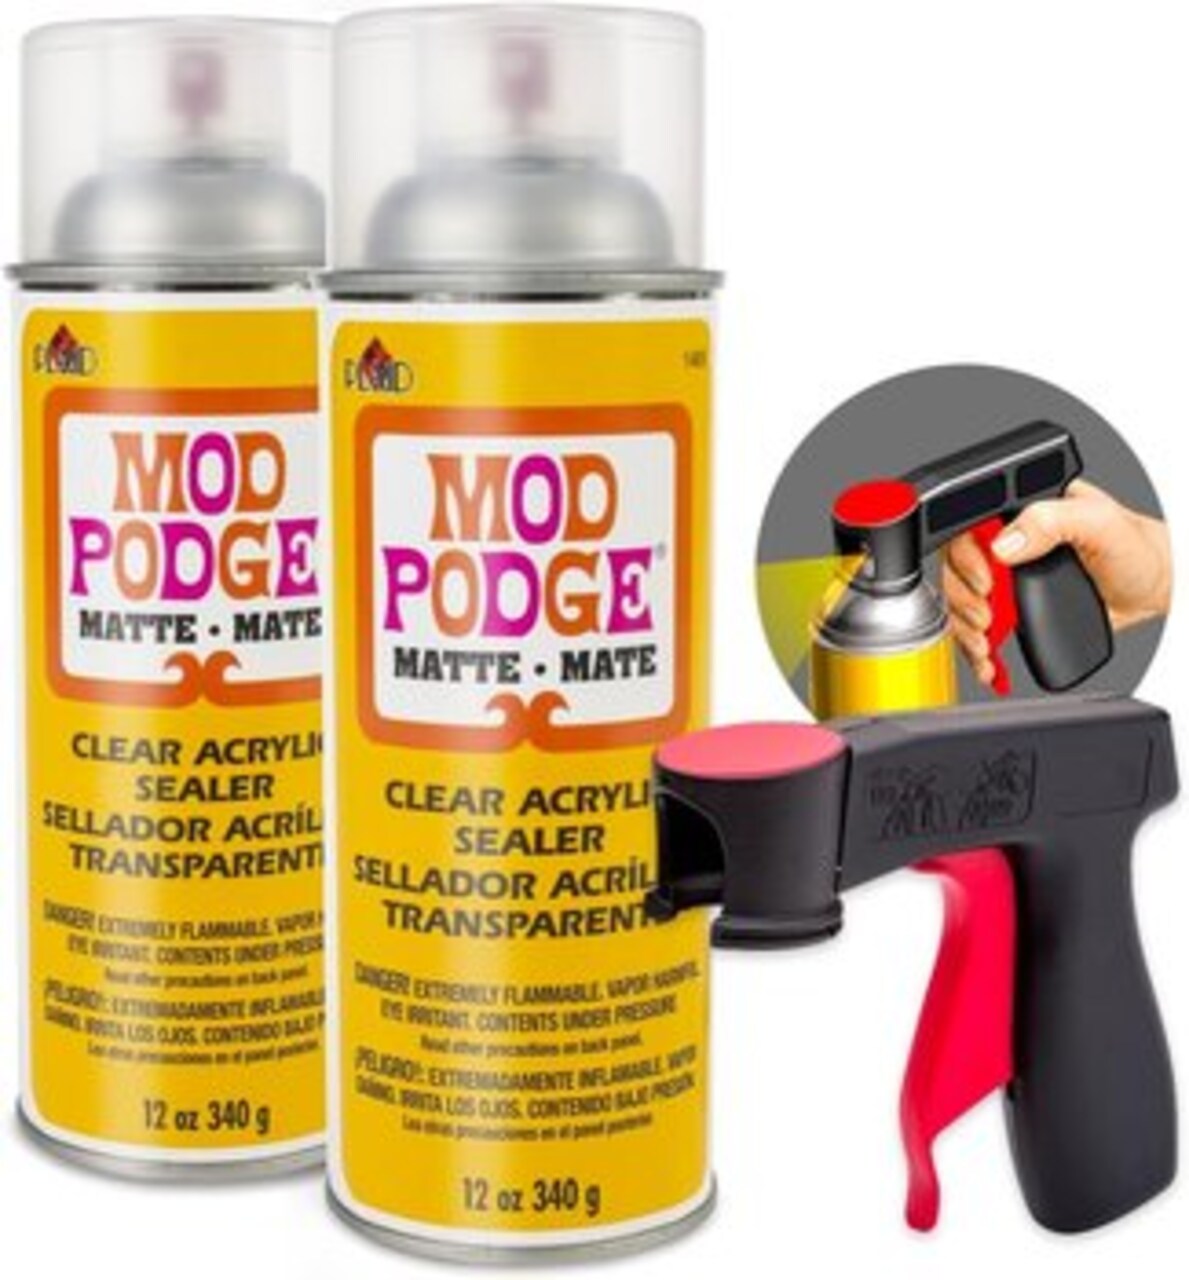 Mod Podge Spray Acrylic Sealer Matte 2-Pack, Clear Coating Matte Paint  Sealer Spray, Spray Can Sprayer Handle